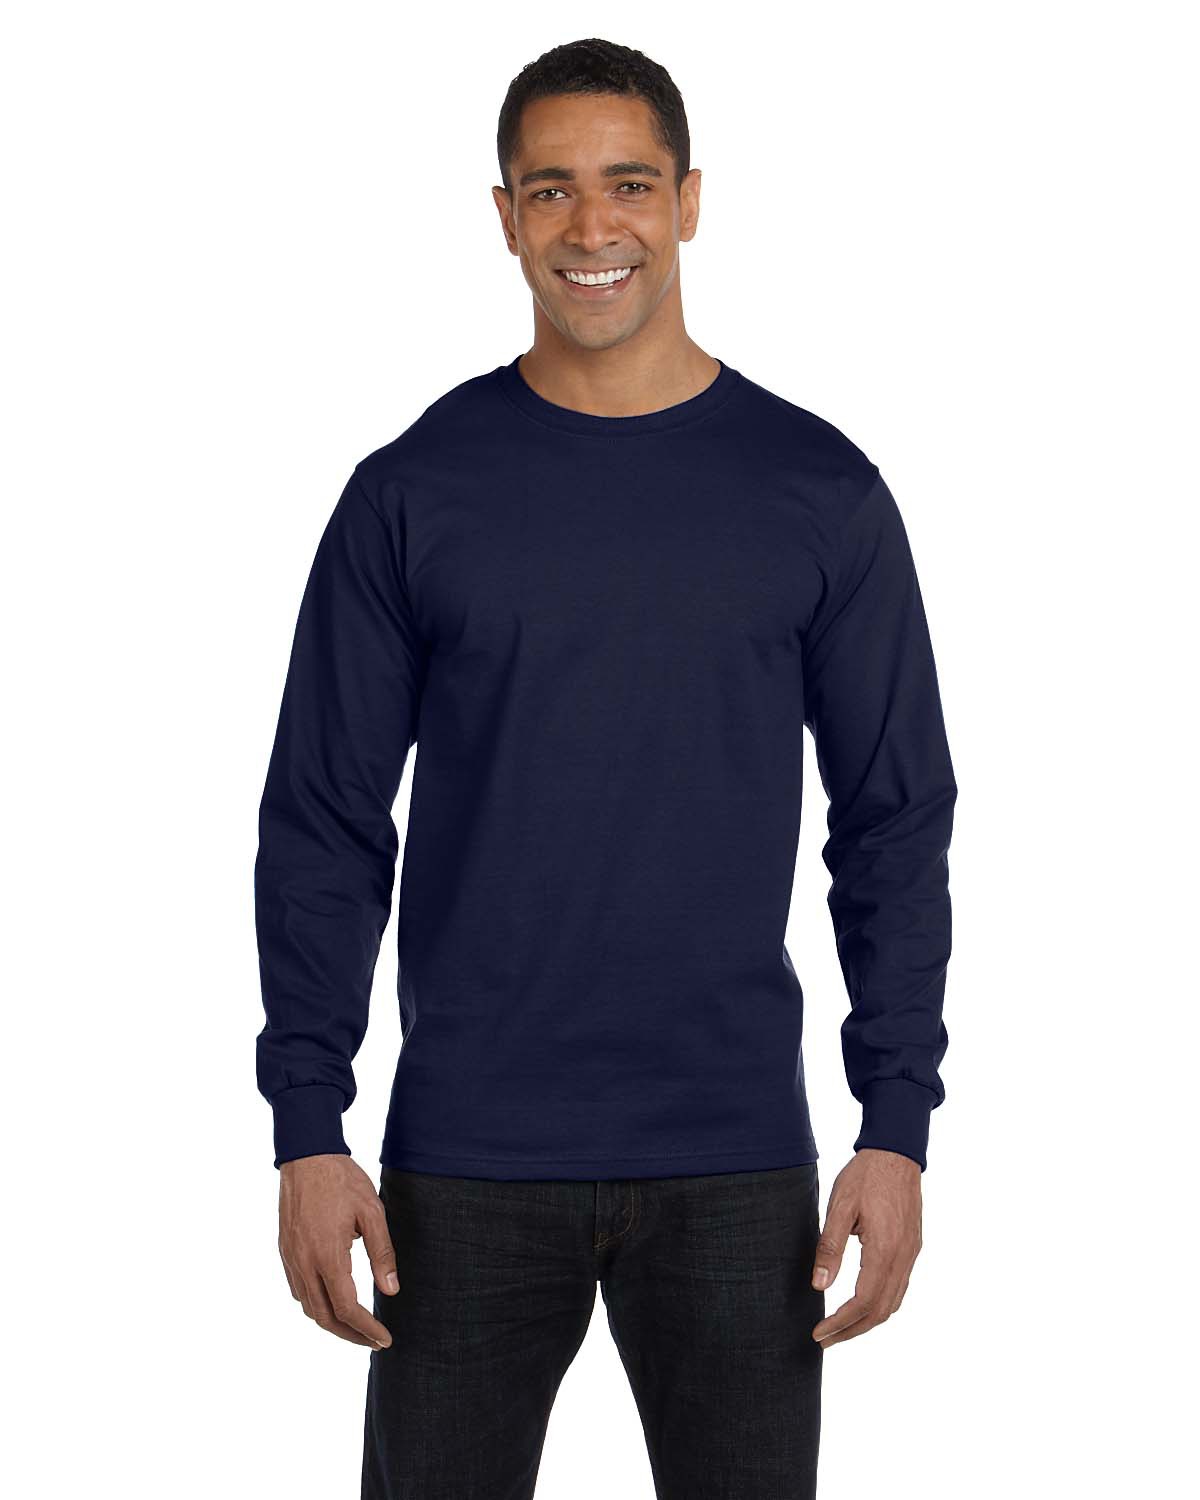 "Design #1" Champion 12 ounce Navy Crewneck Sweatshirt